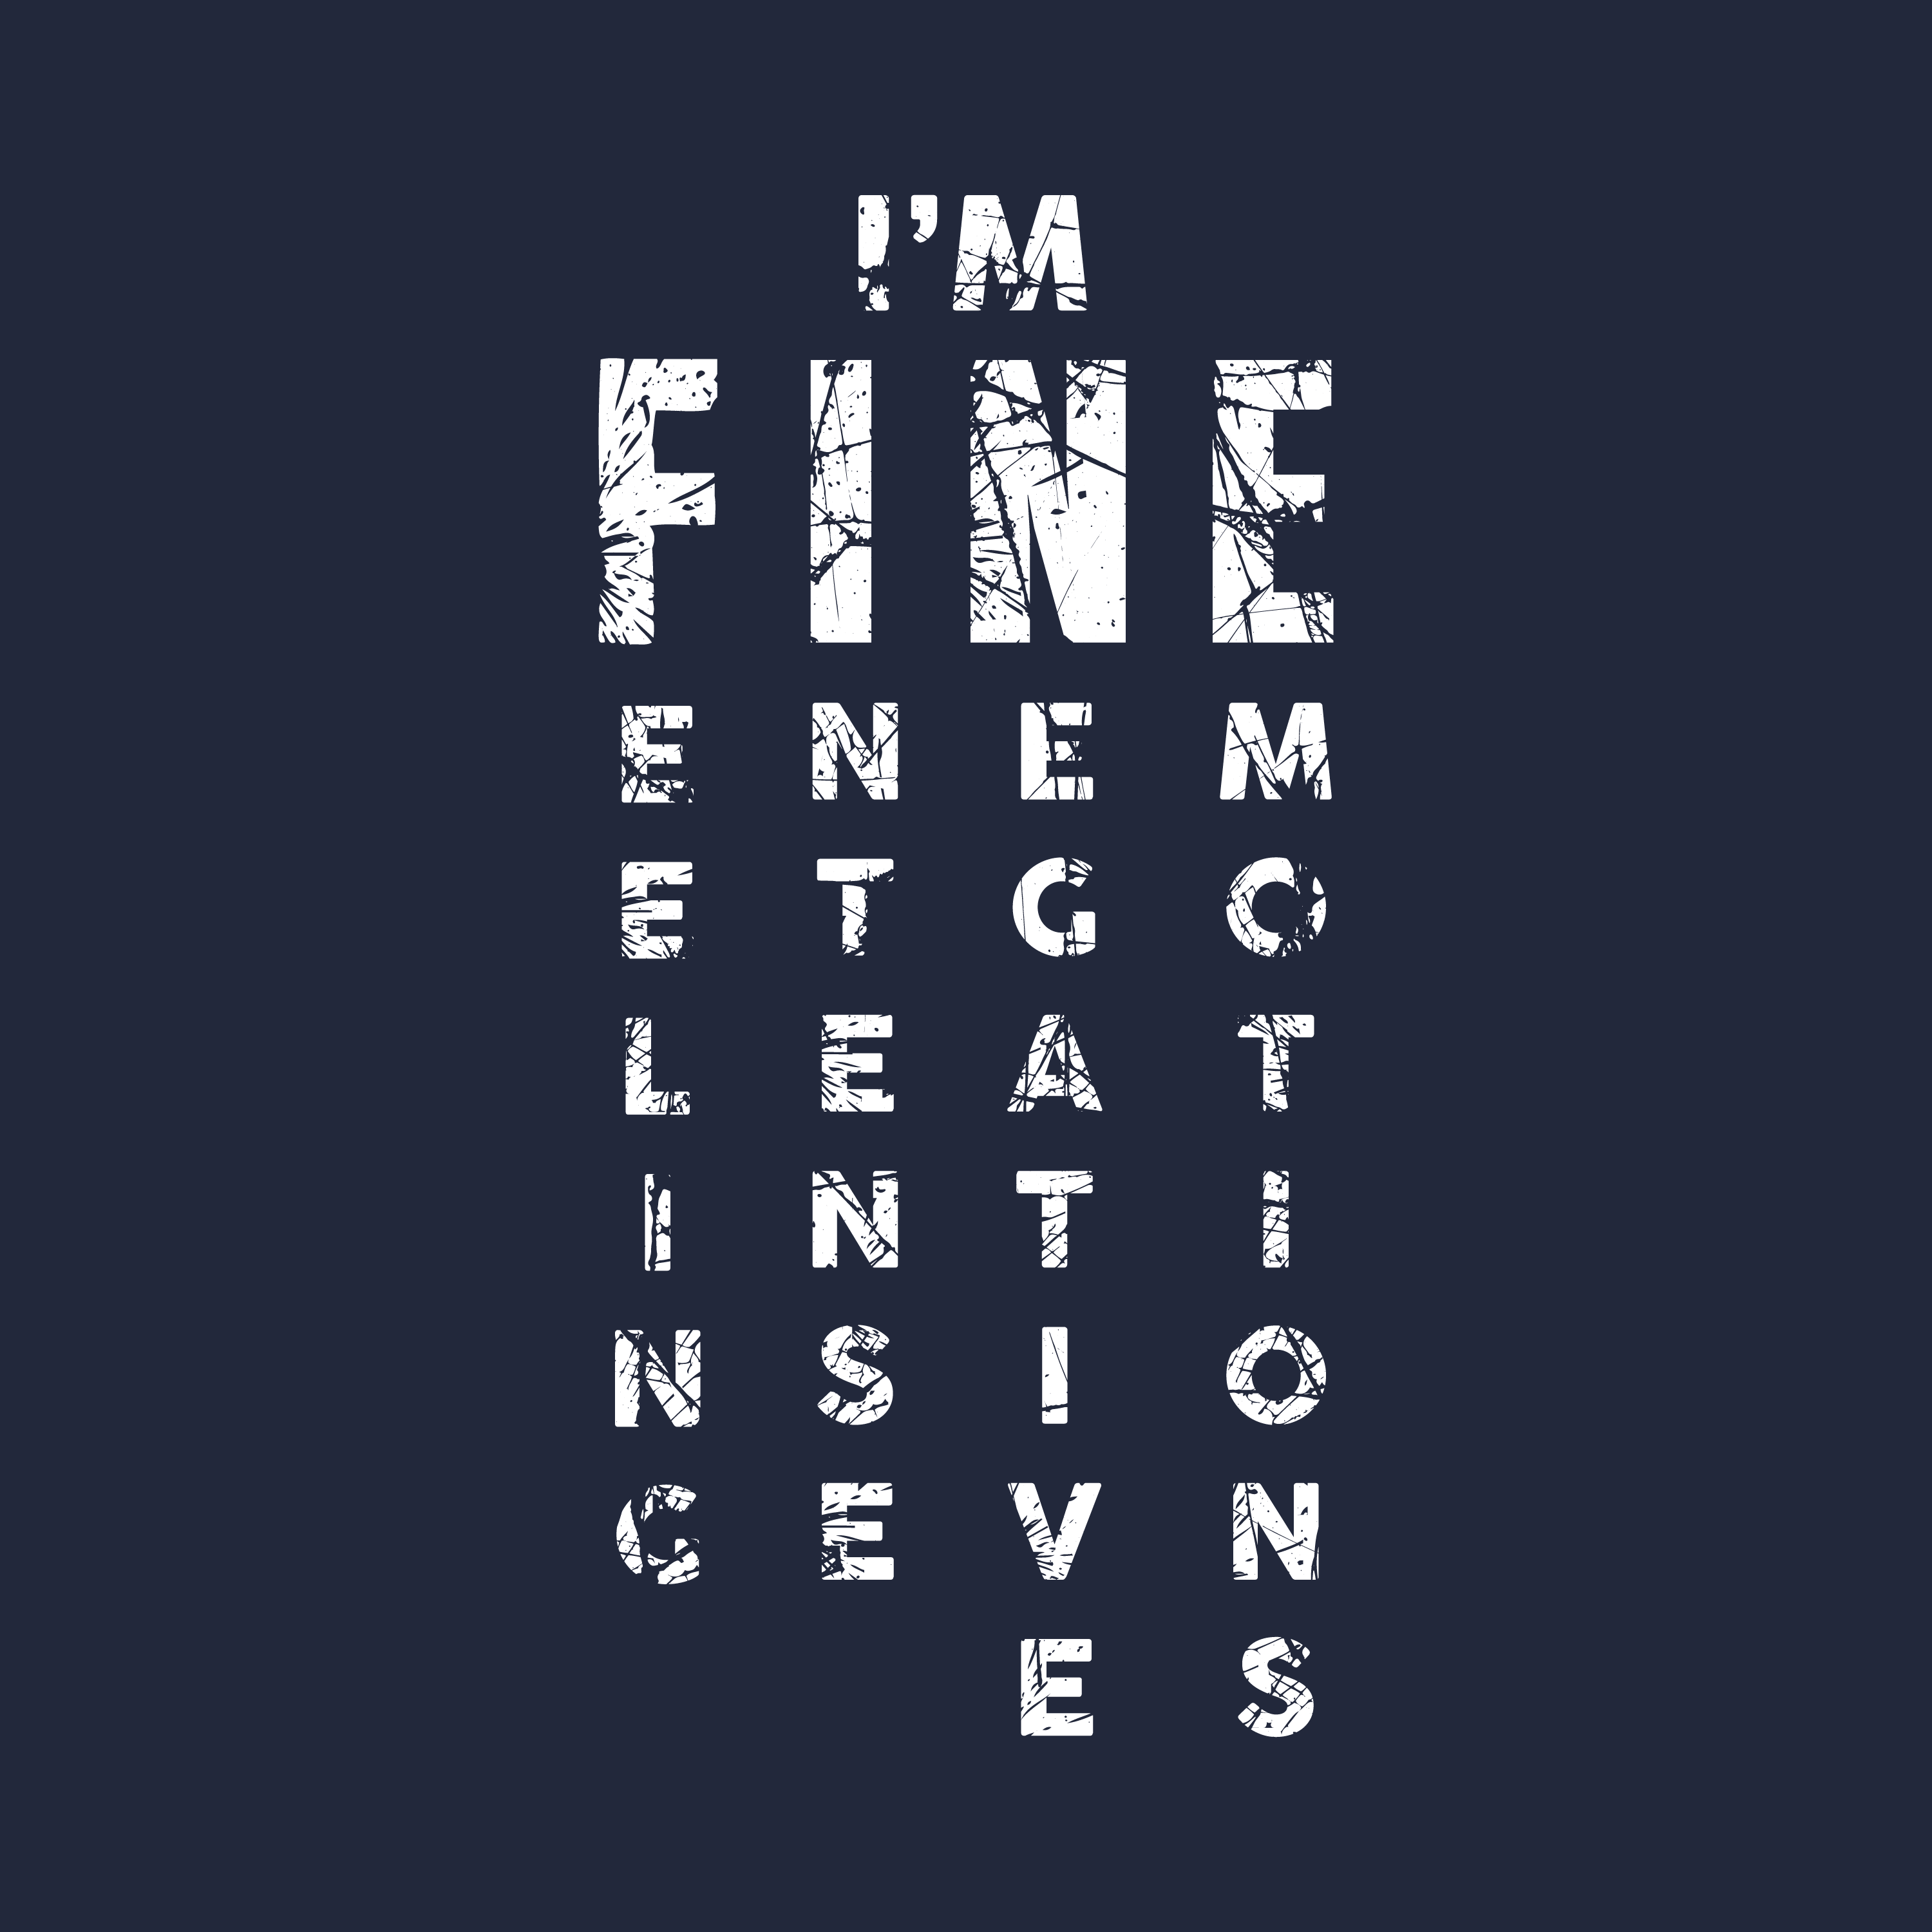 I'm Fine